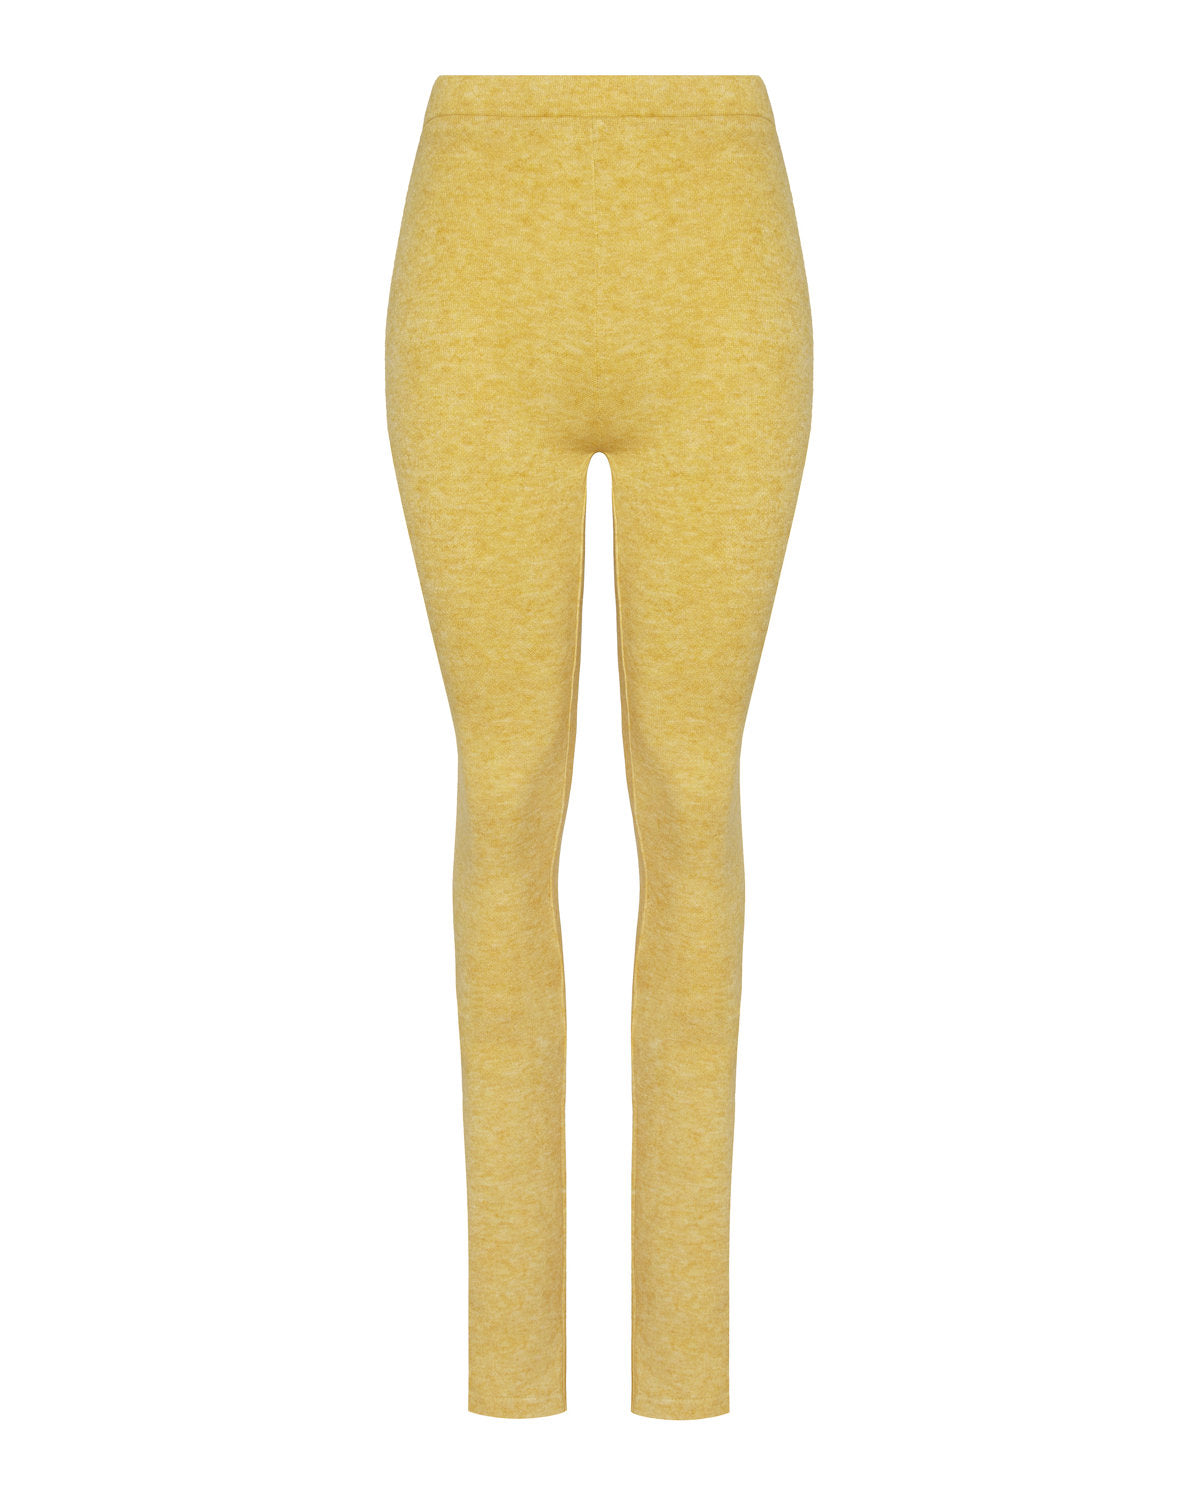 Extra long leggings yellow